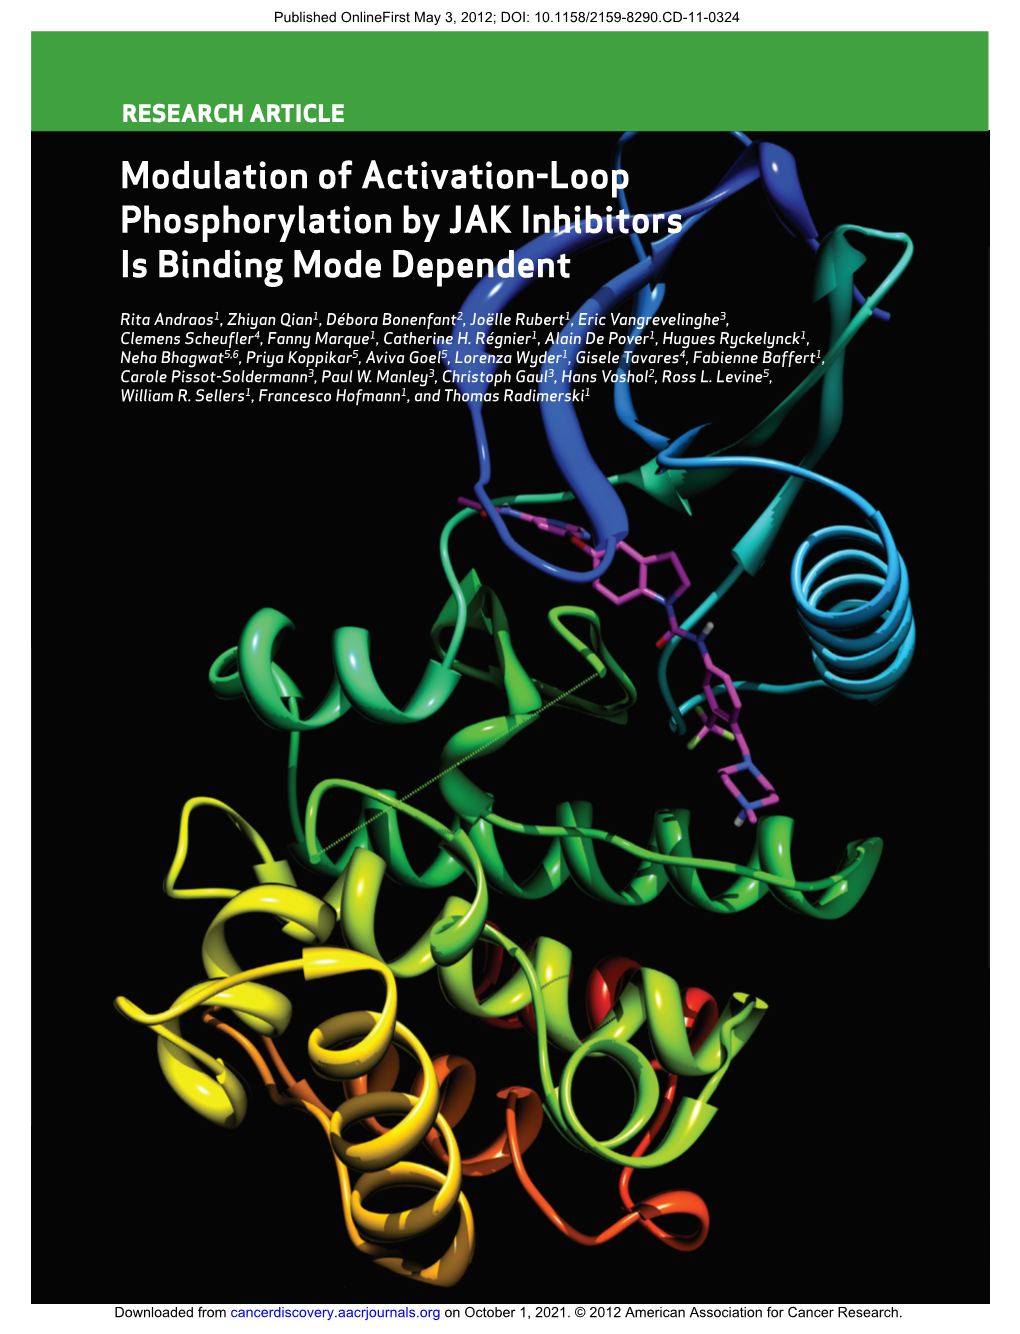 Modulation of Activation-Loop Phosphorylation by JAK Inhibitors Is Binding Mode Dependent